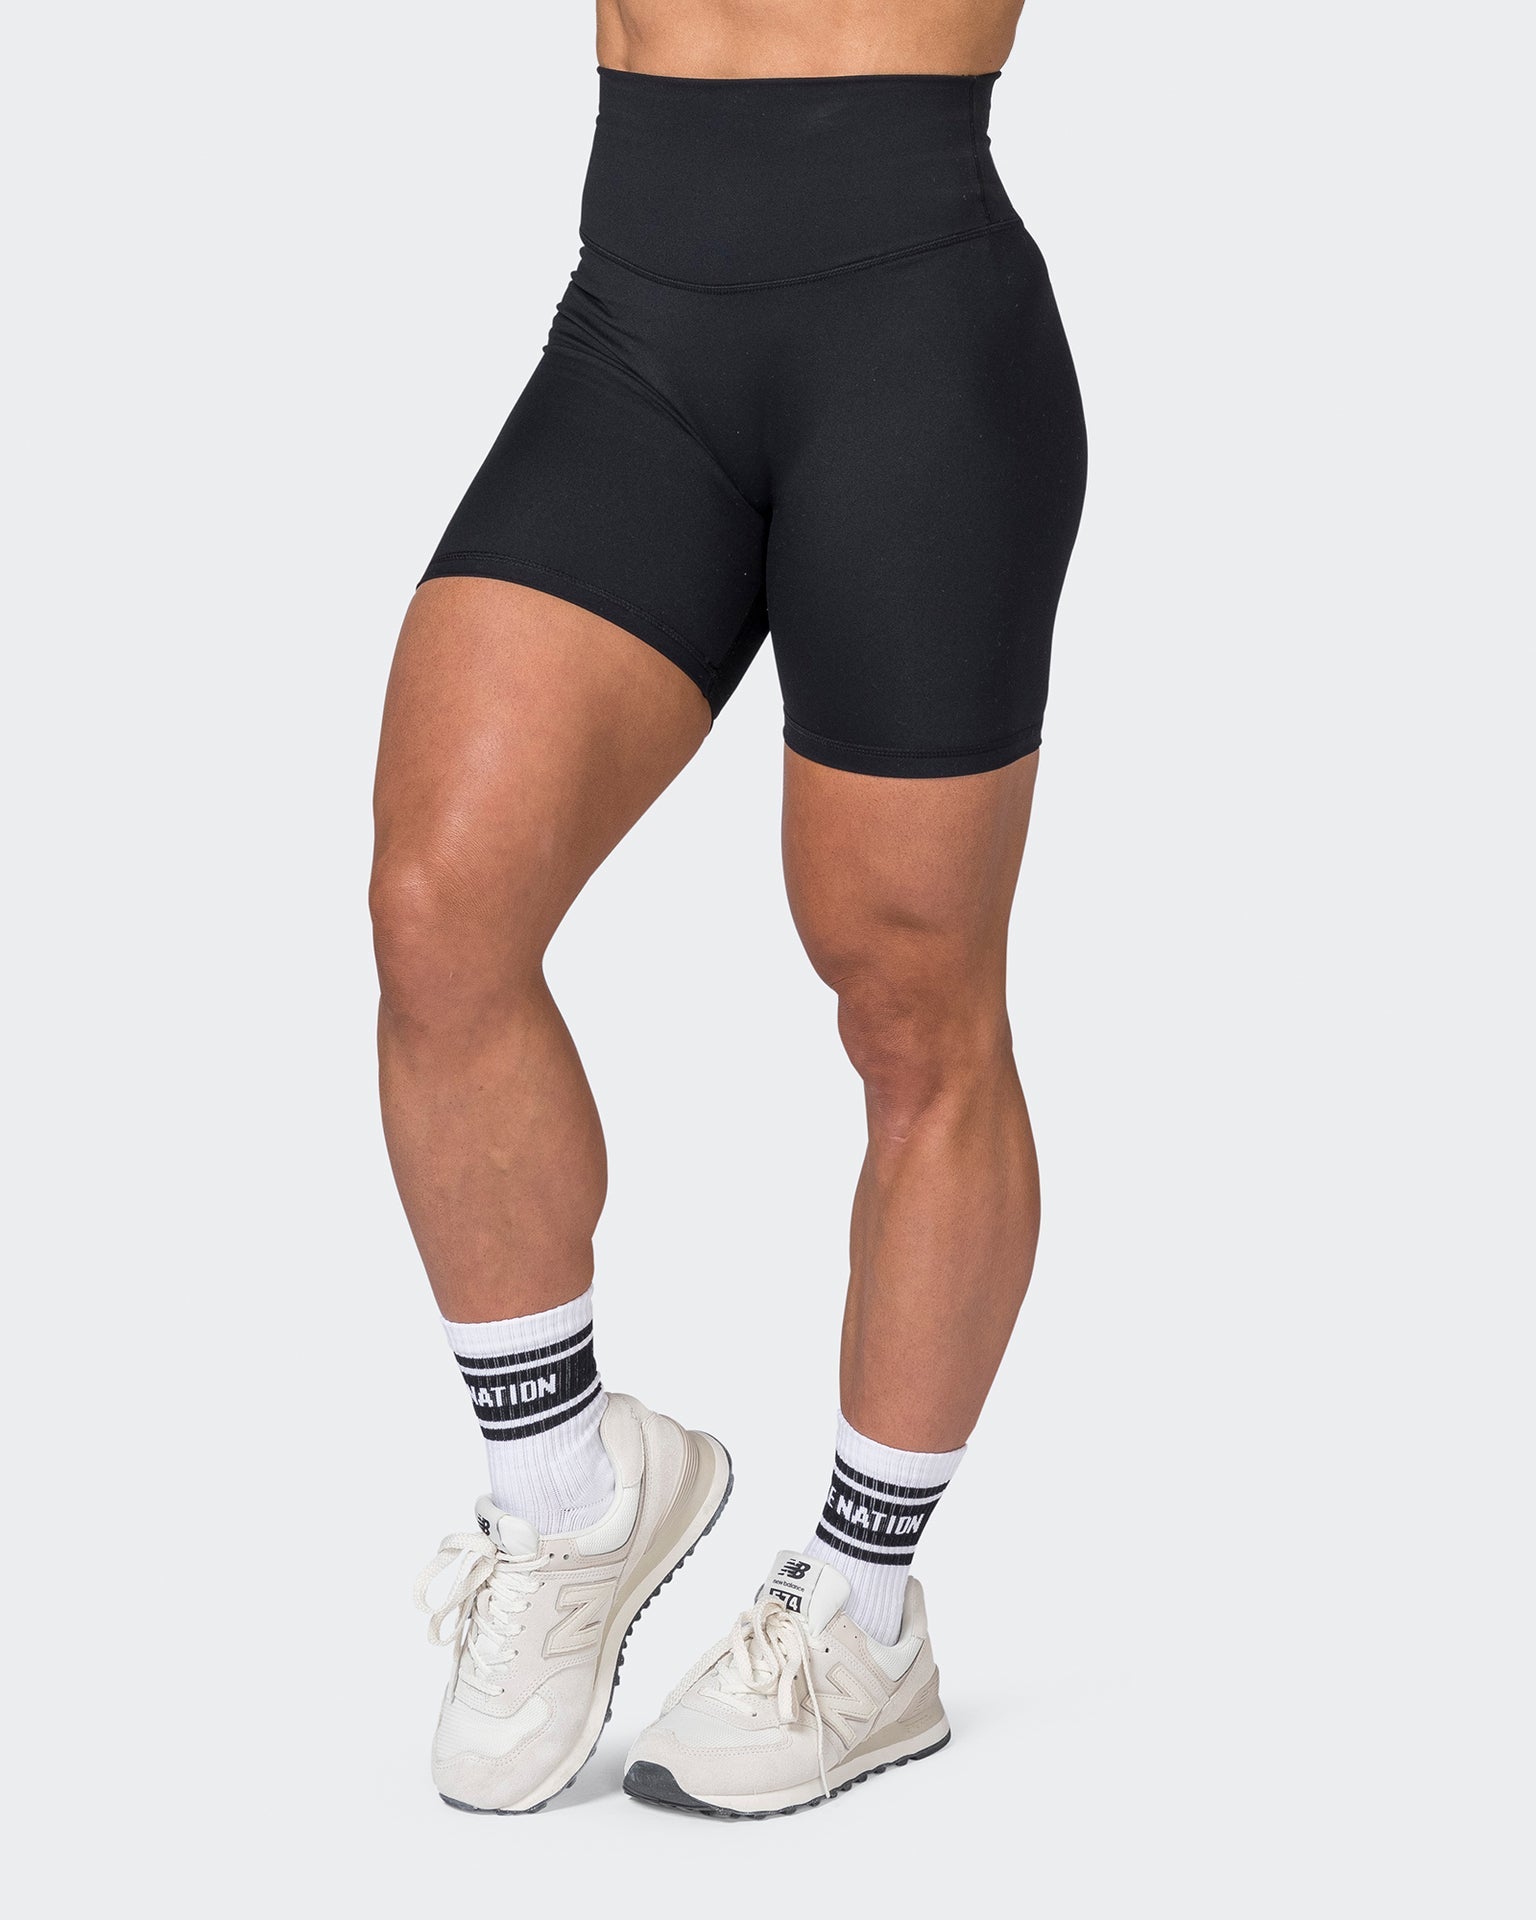 Muscle Nation Bike Shorts Ultra Signature Bike Shorts - Black